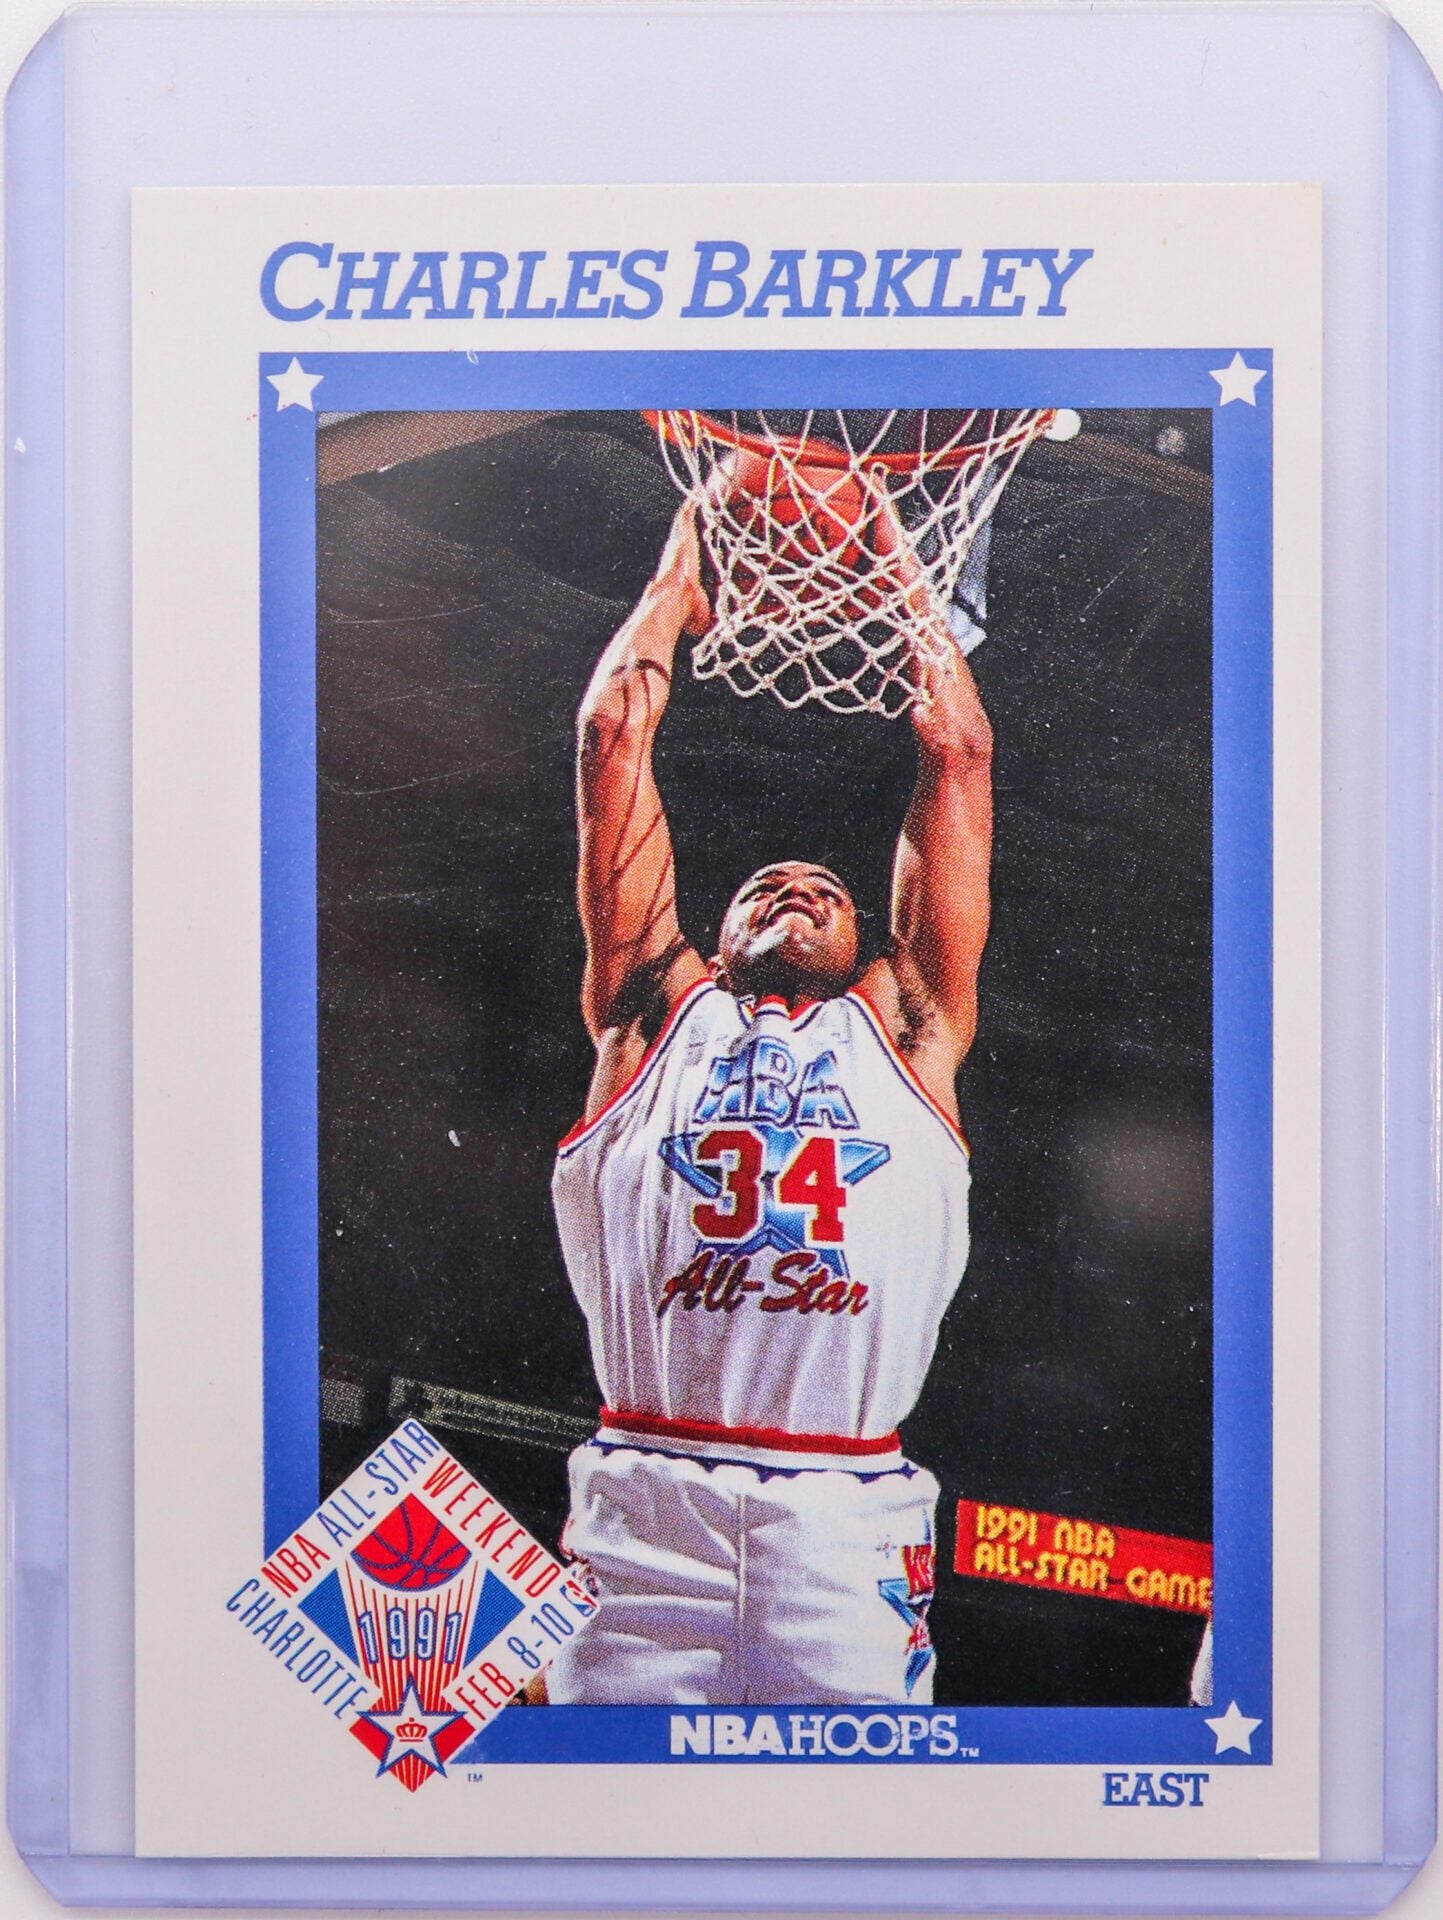 1991-92 NBA Hoops Charles Barkley All-Star Card, Mint